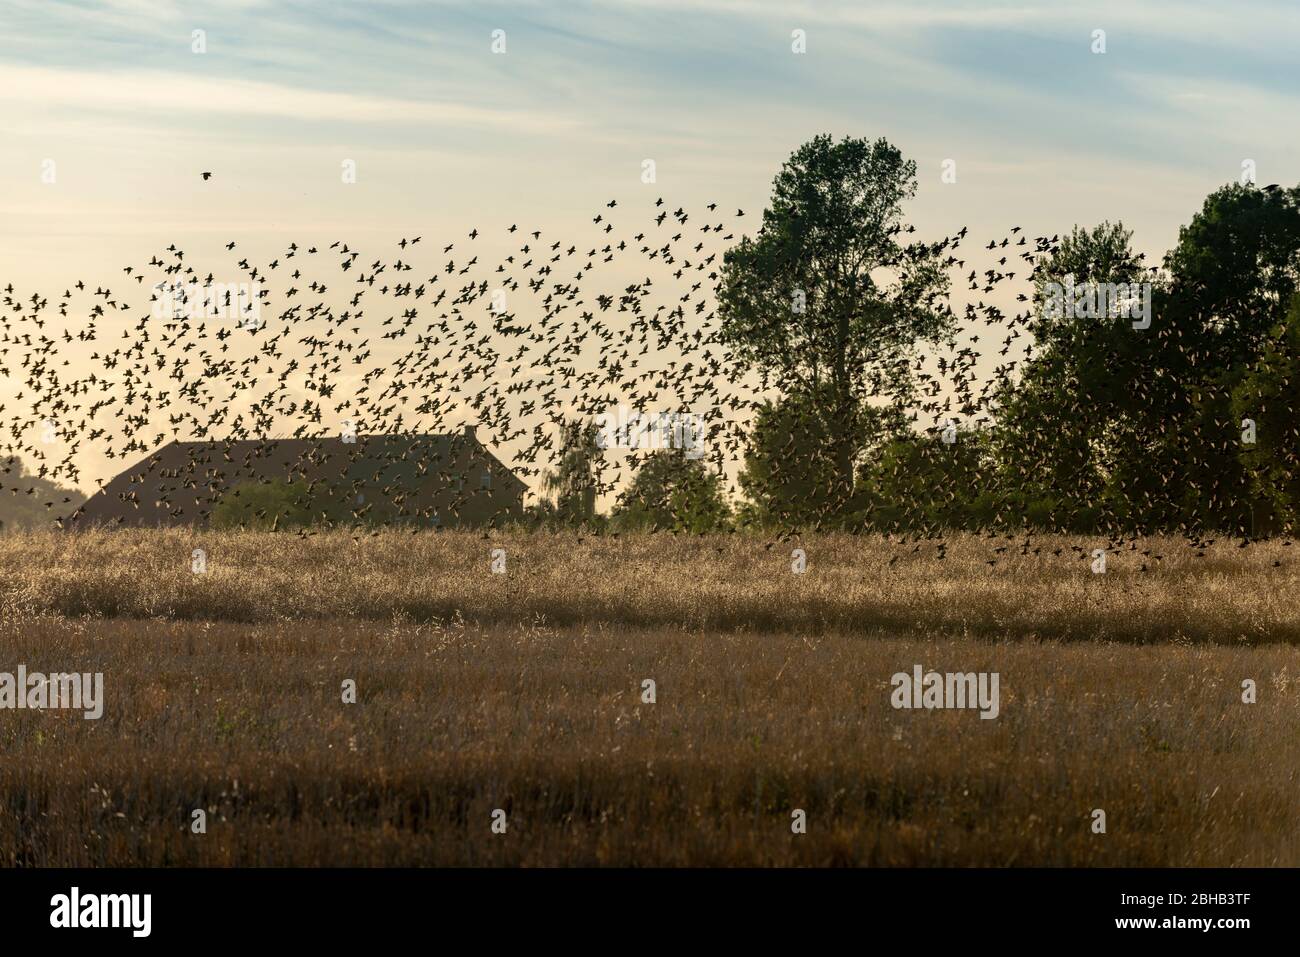 Stare (Sturnidae), star swarm in East Frisia. Stock Photo